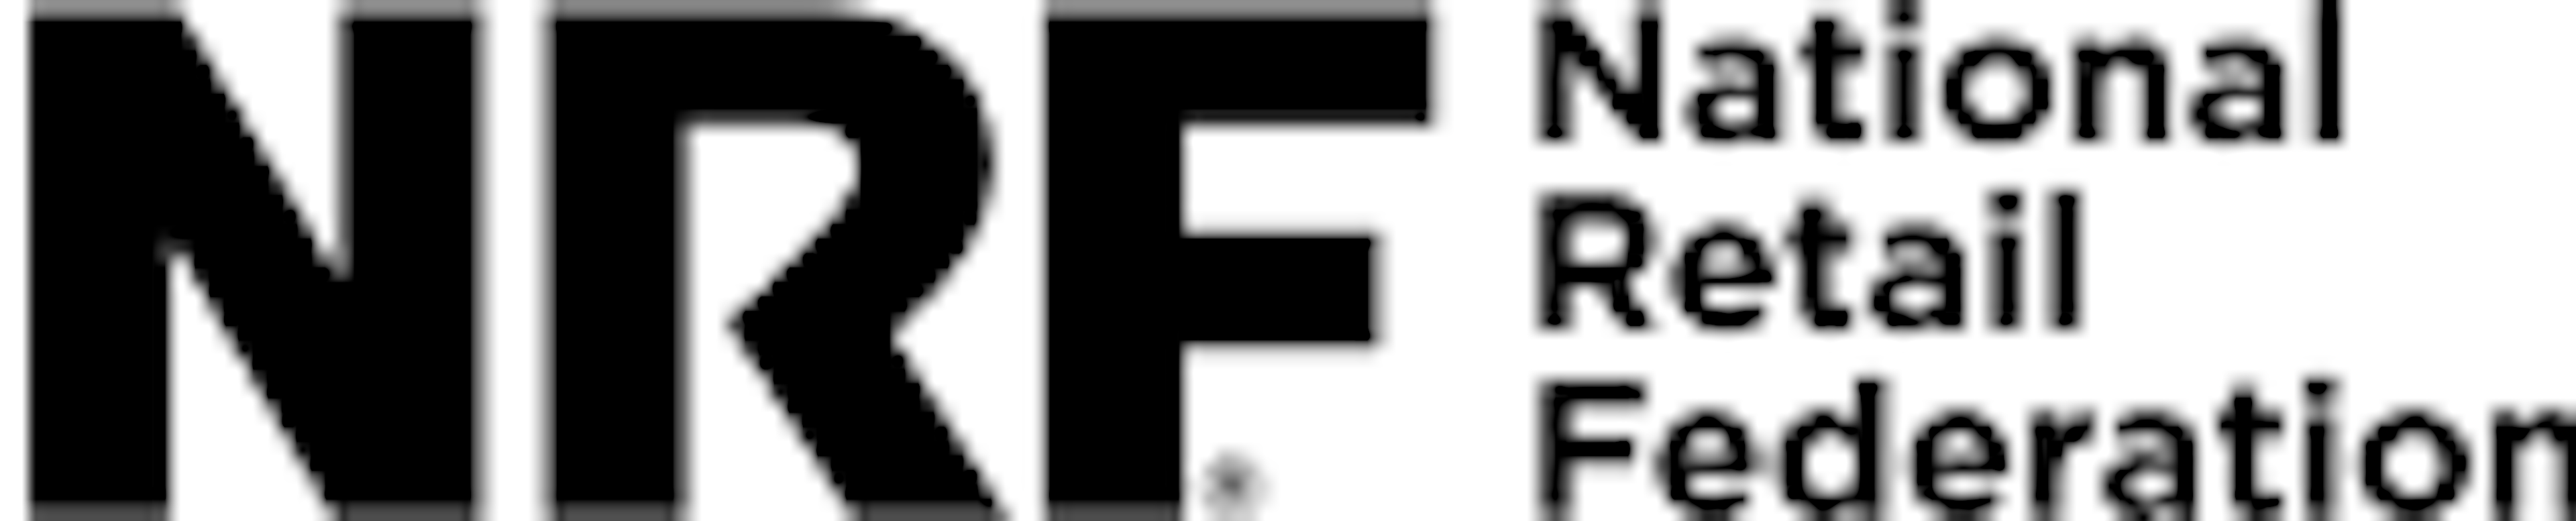 National Retail Federation’s logo.